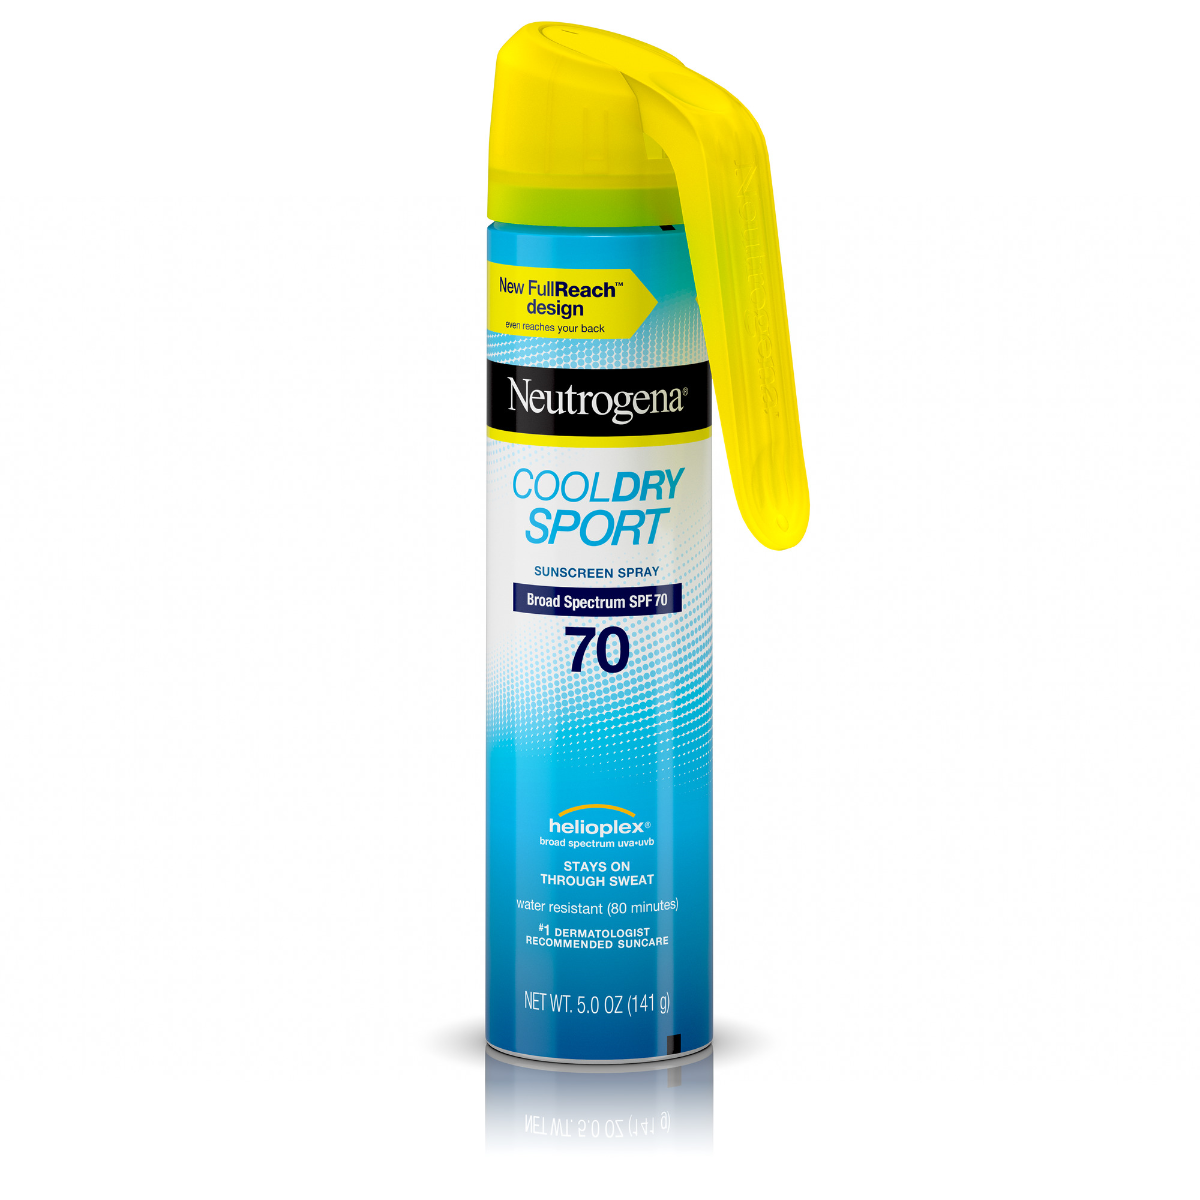 Neutrogena Cool Dry Sport Sunscreen SPF 70
